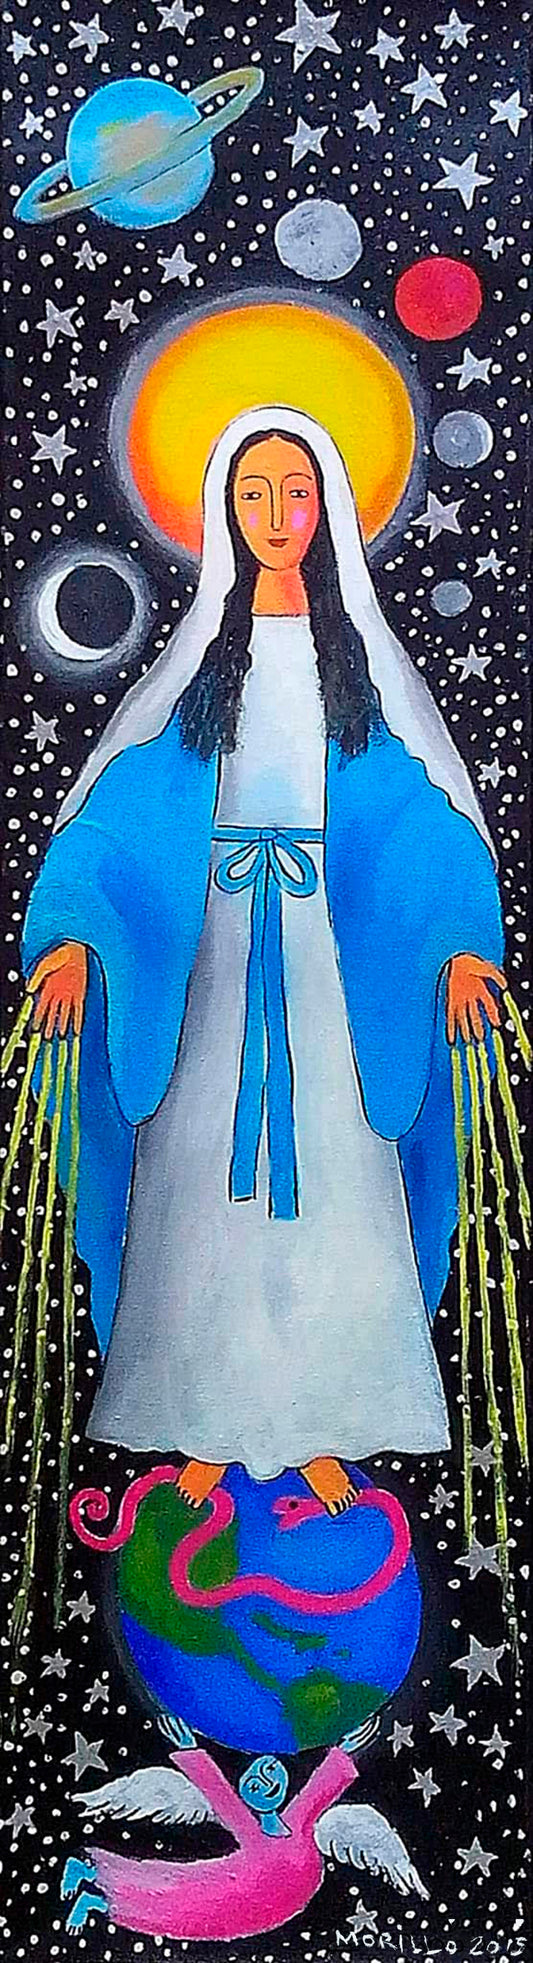 Jose Morillo 25"x13" The Virgin Mary & The Miraculous Medal 2015 Acrylic on Canvas #14JM-DR